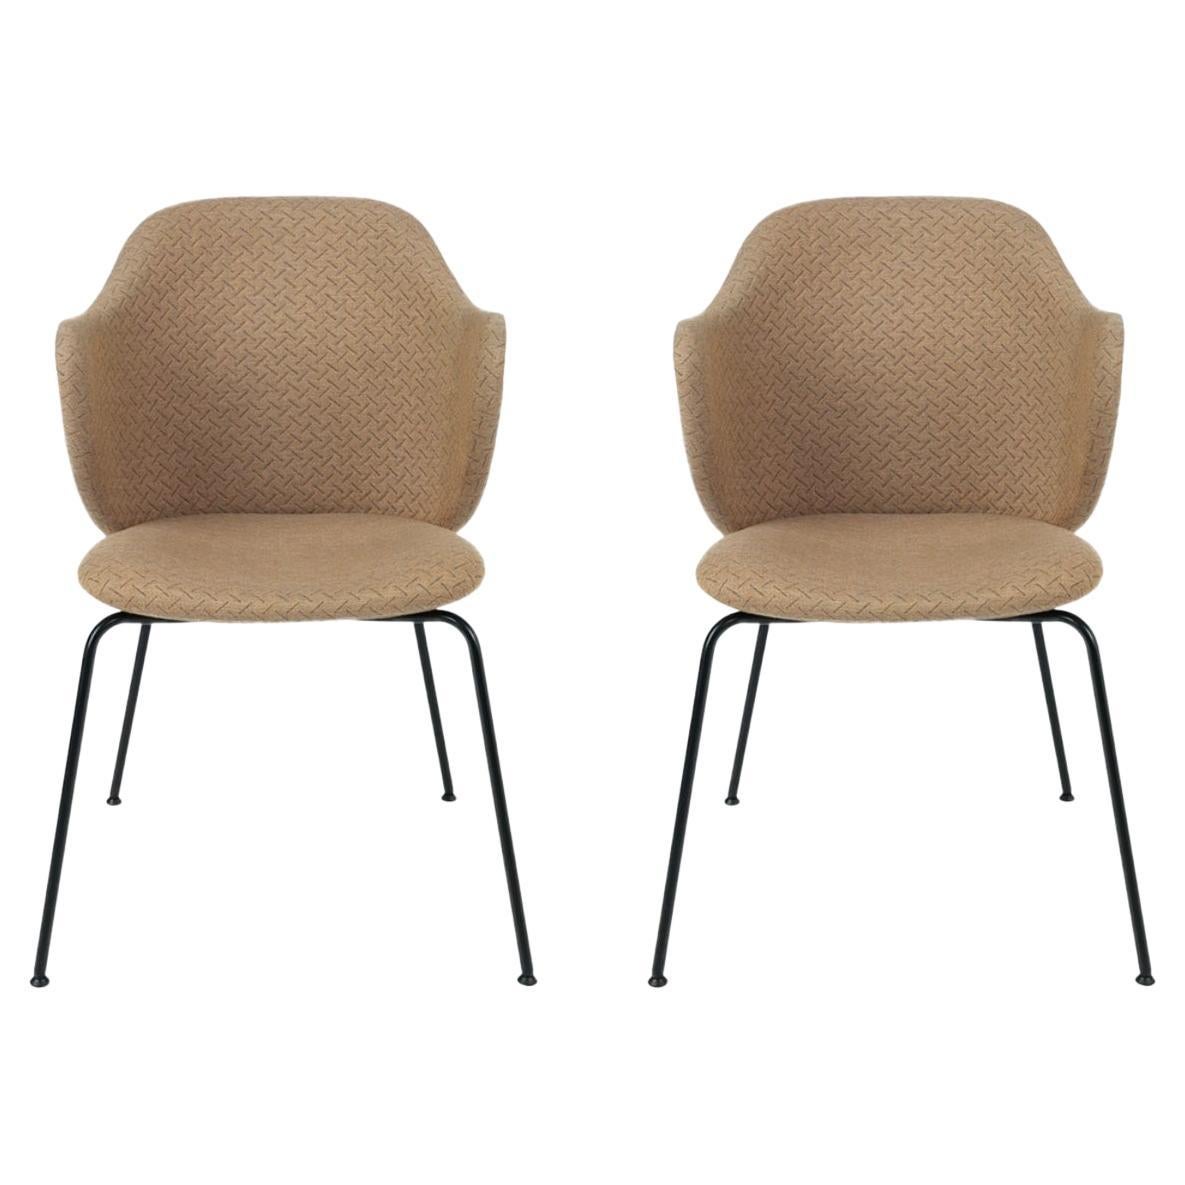 Set of 2 Brown Jupiter Lassen Chairs by Lassen For Sale